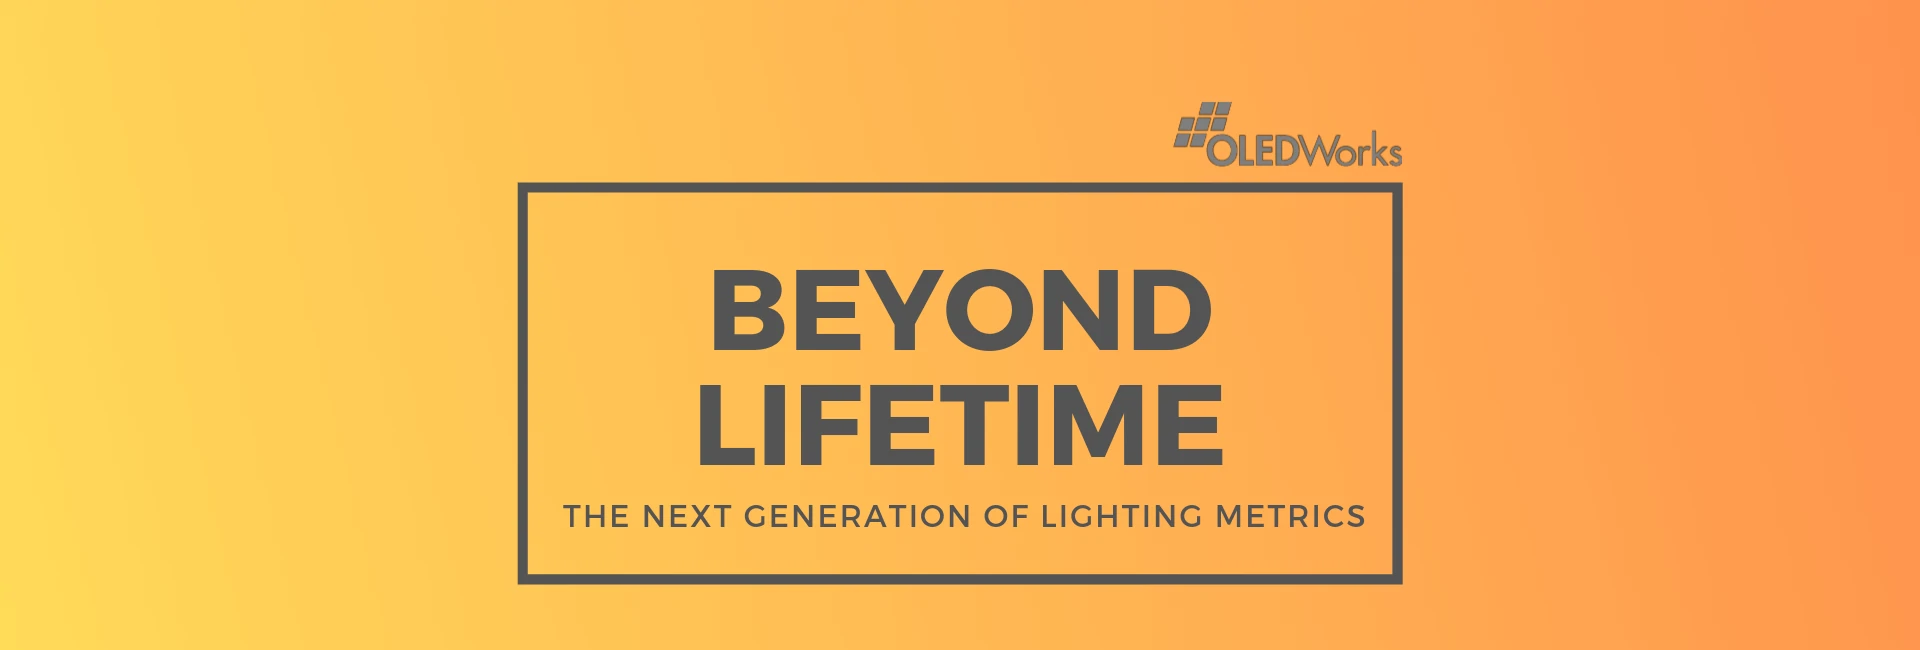 Beyond Lifetime - The Next Generation of Lighting Metrics